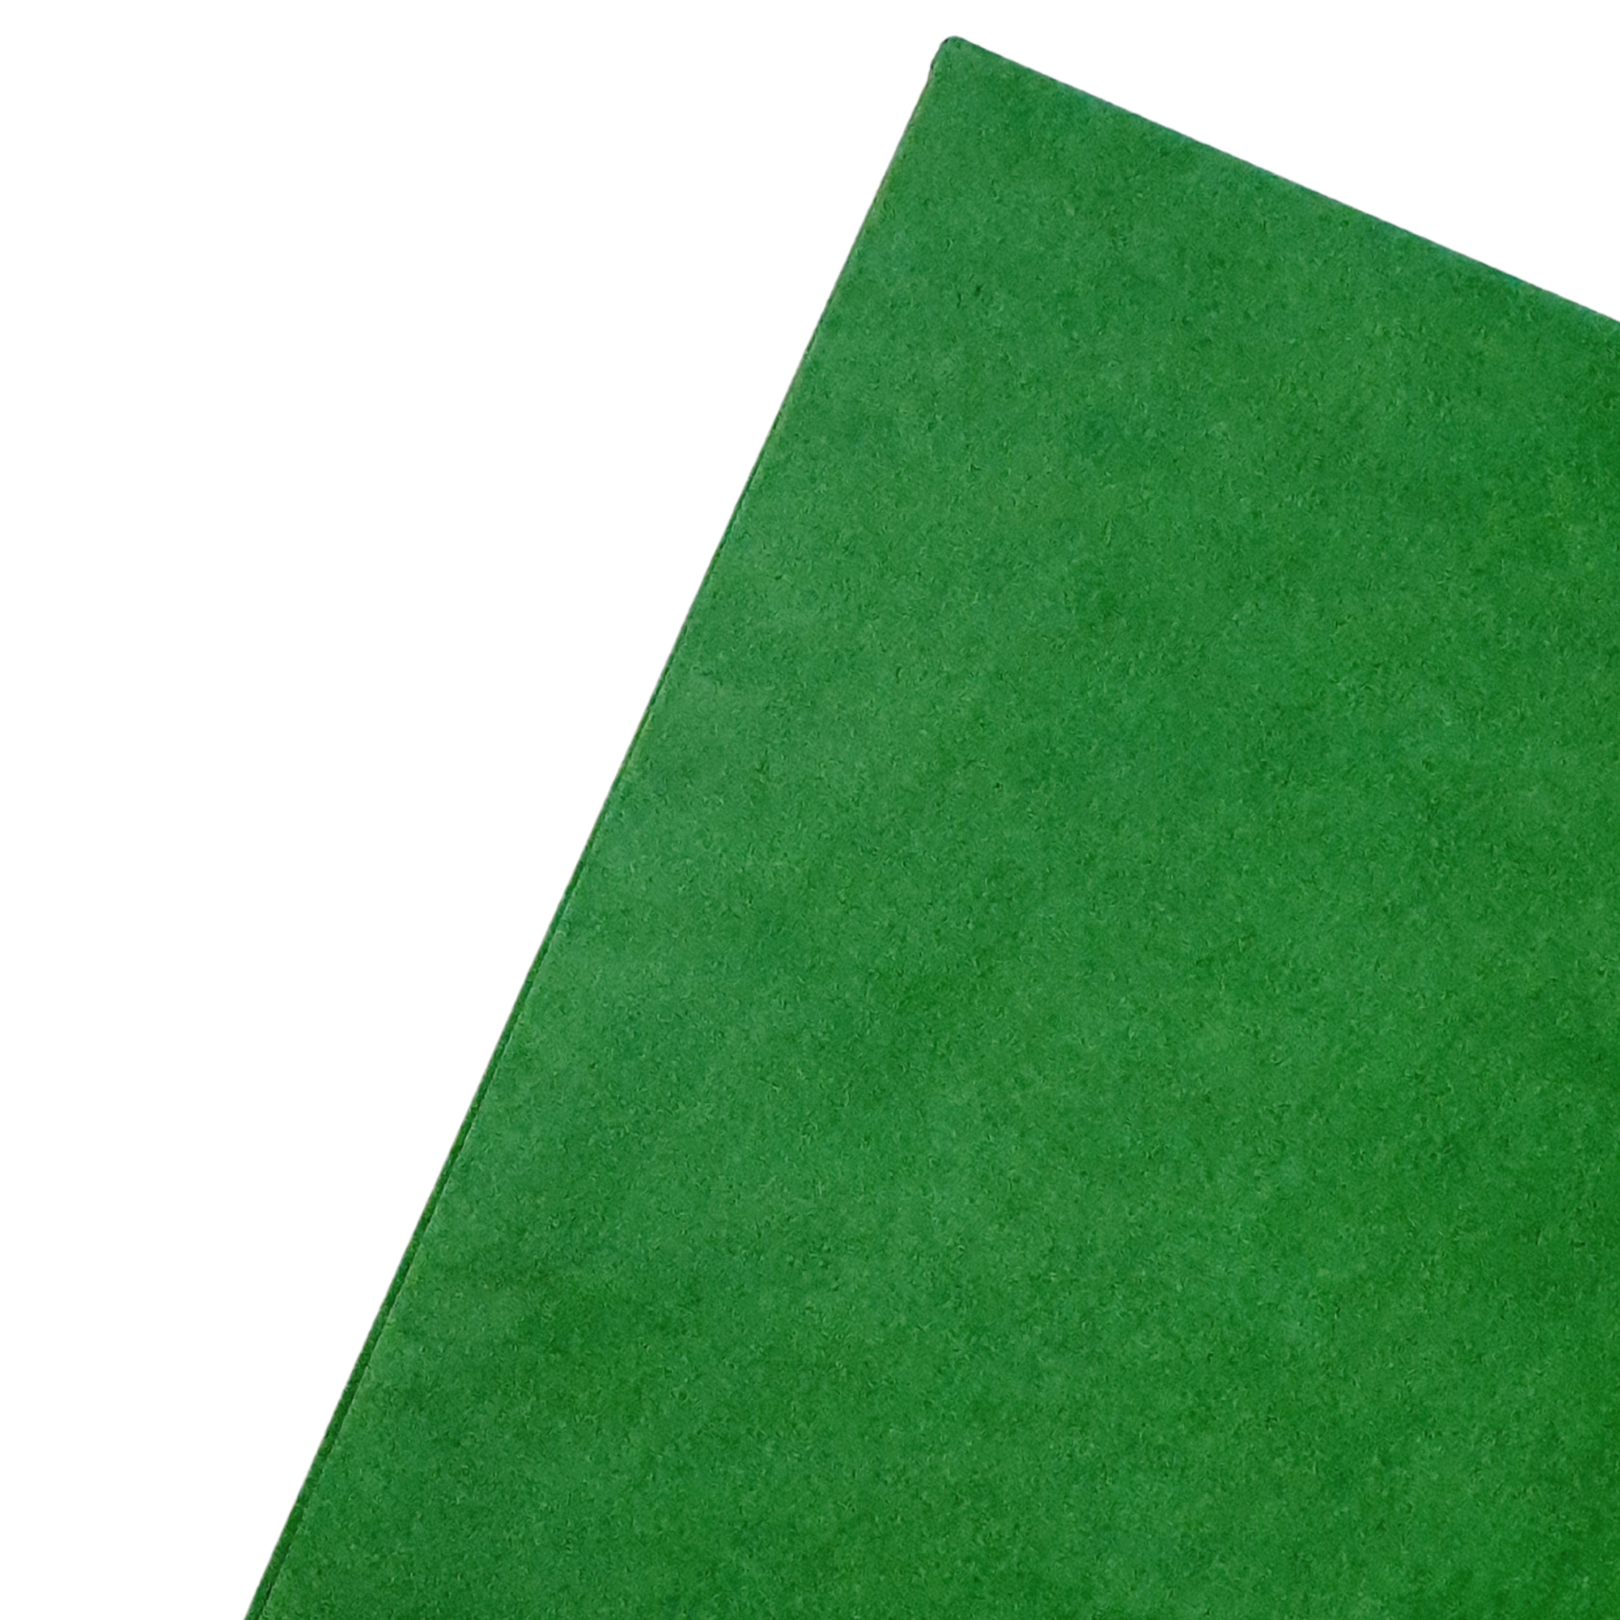 GREEN TISSUE PAPER